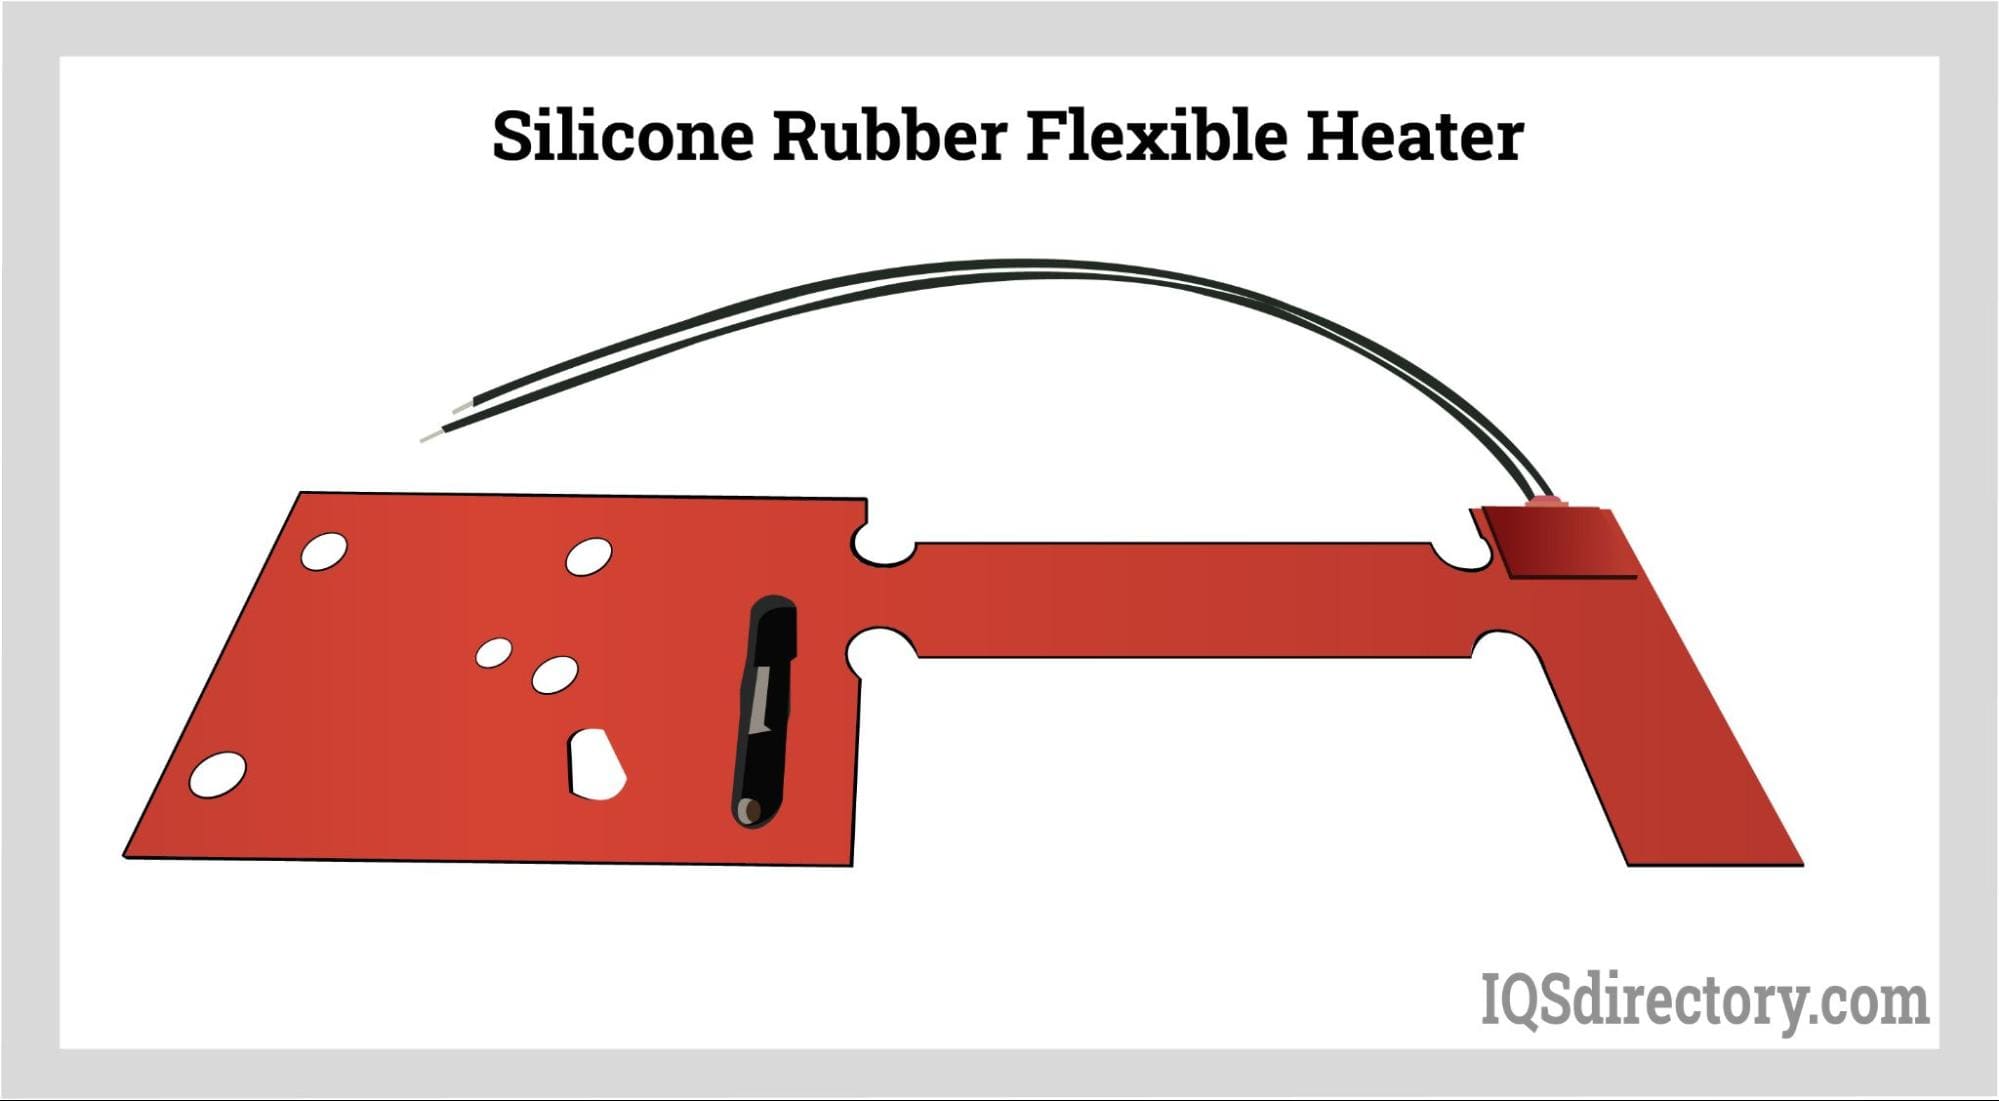 Silicone Rubber Flexible Heater